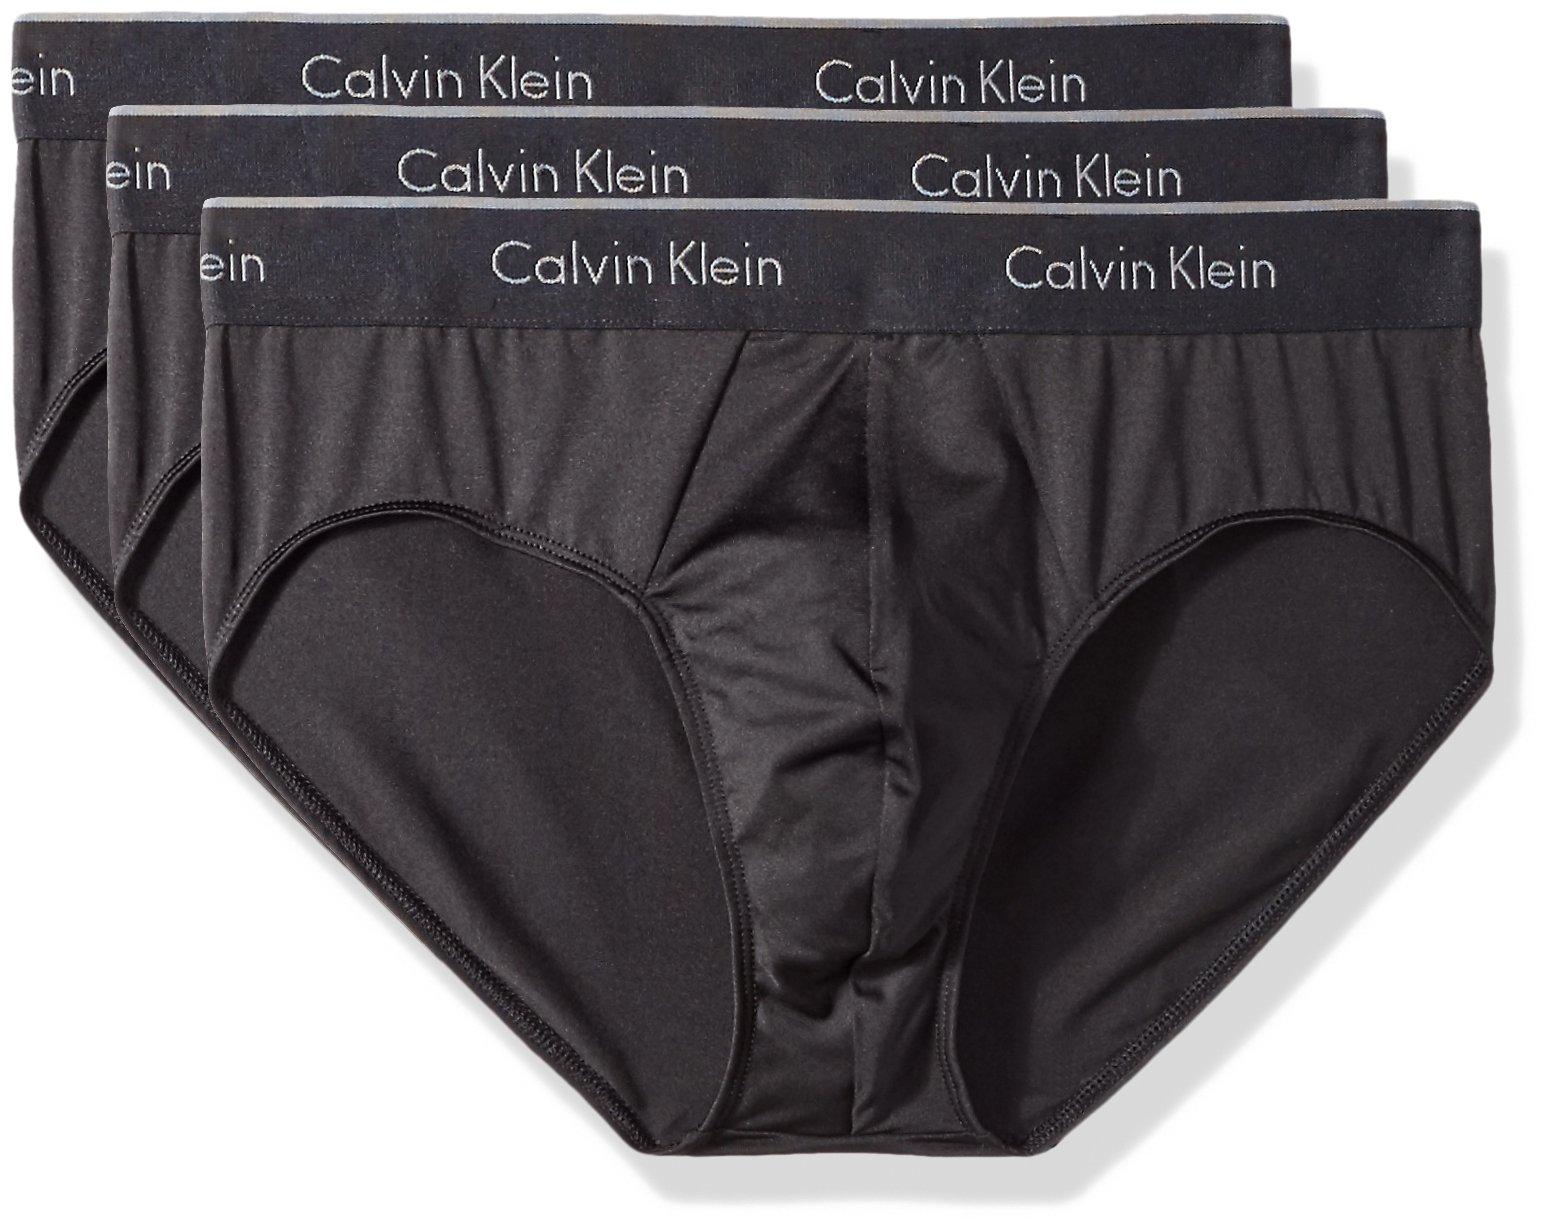 Calvin Klein Microfiber Stretch Multipack Briefs in Black for Men - Lyst